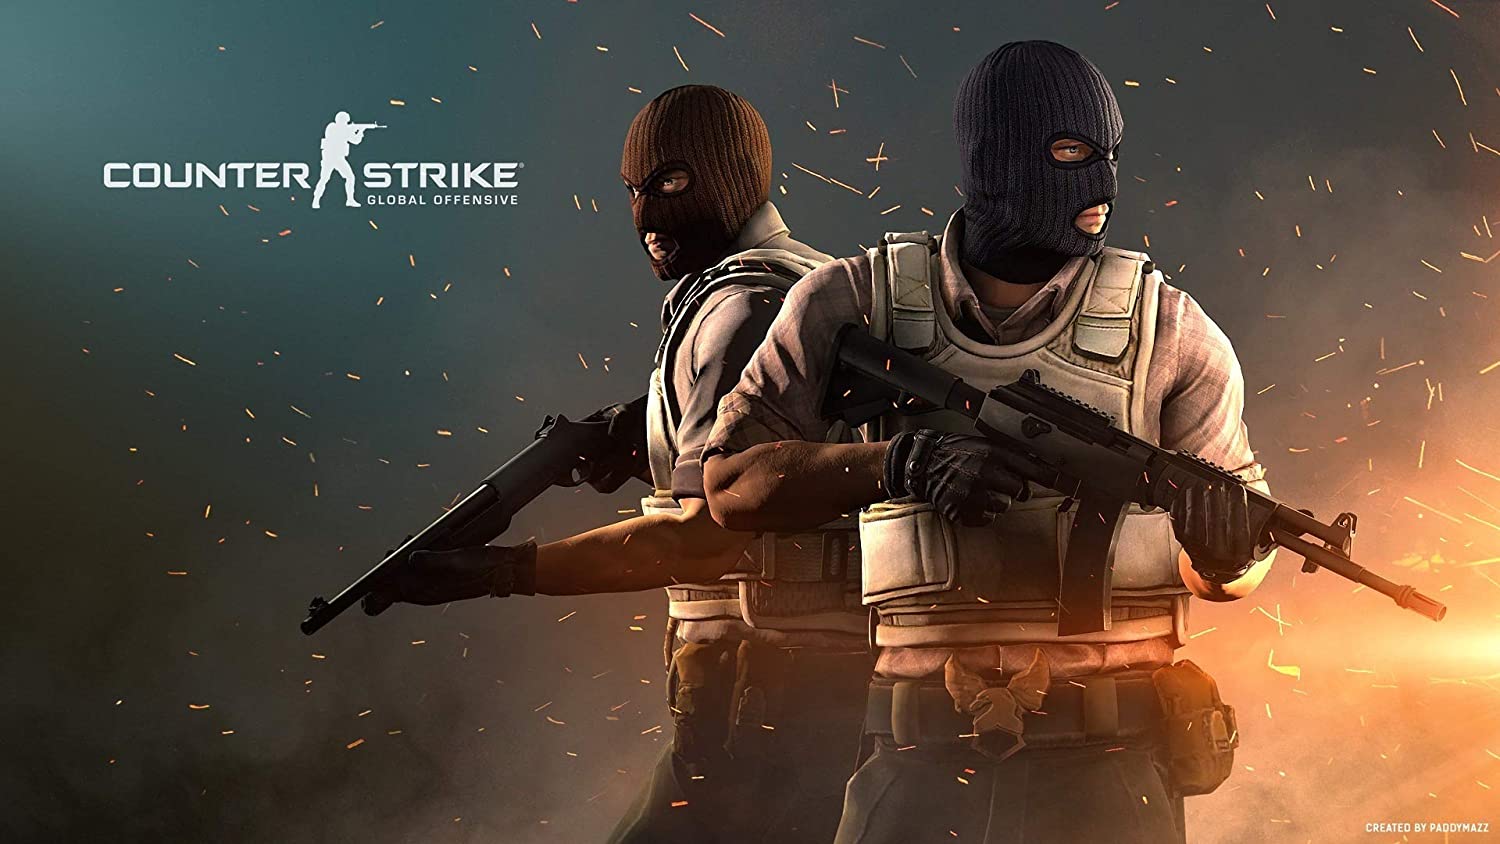 Fast Shop anuncia torneio gratuito de Counter-Strike! - The Game Times